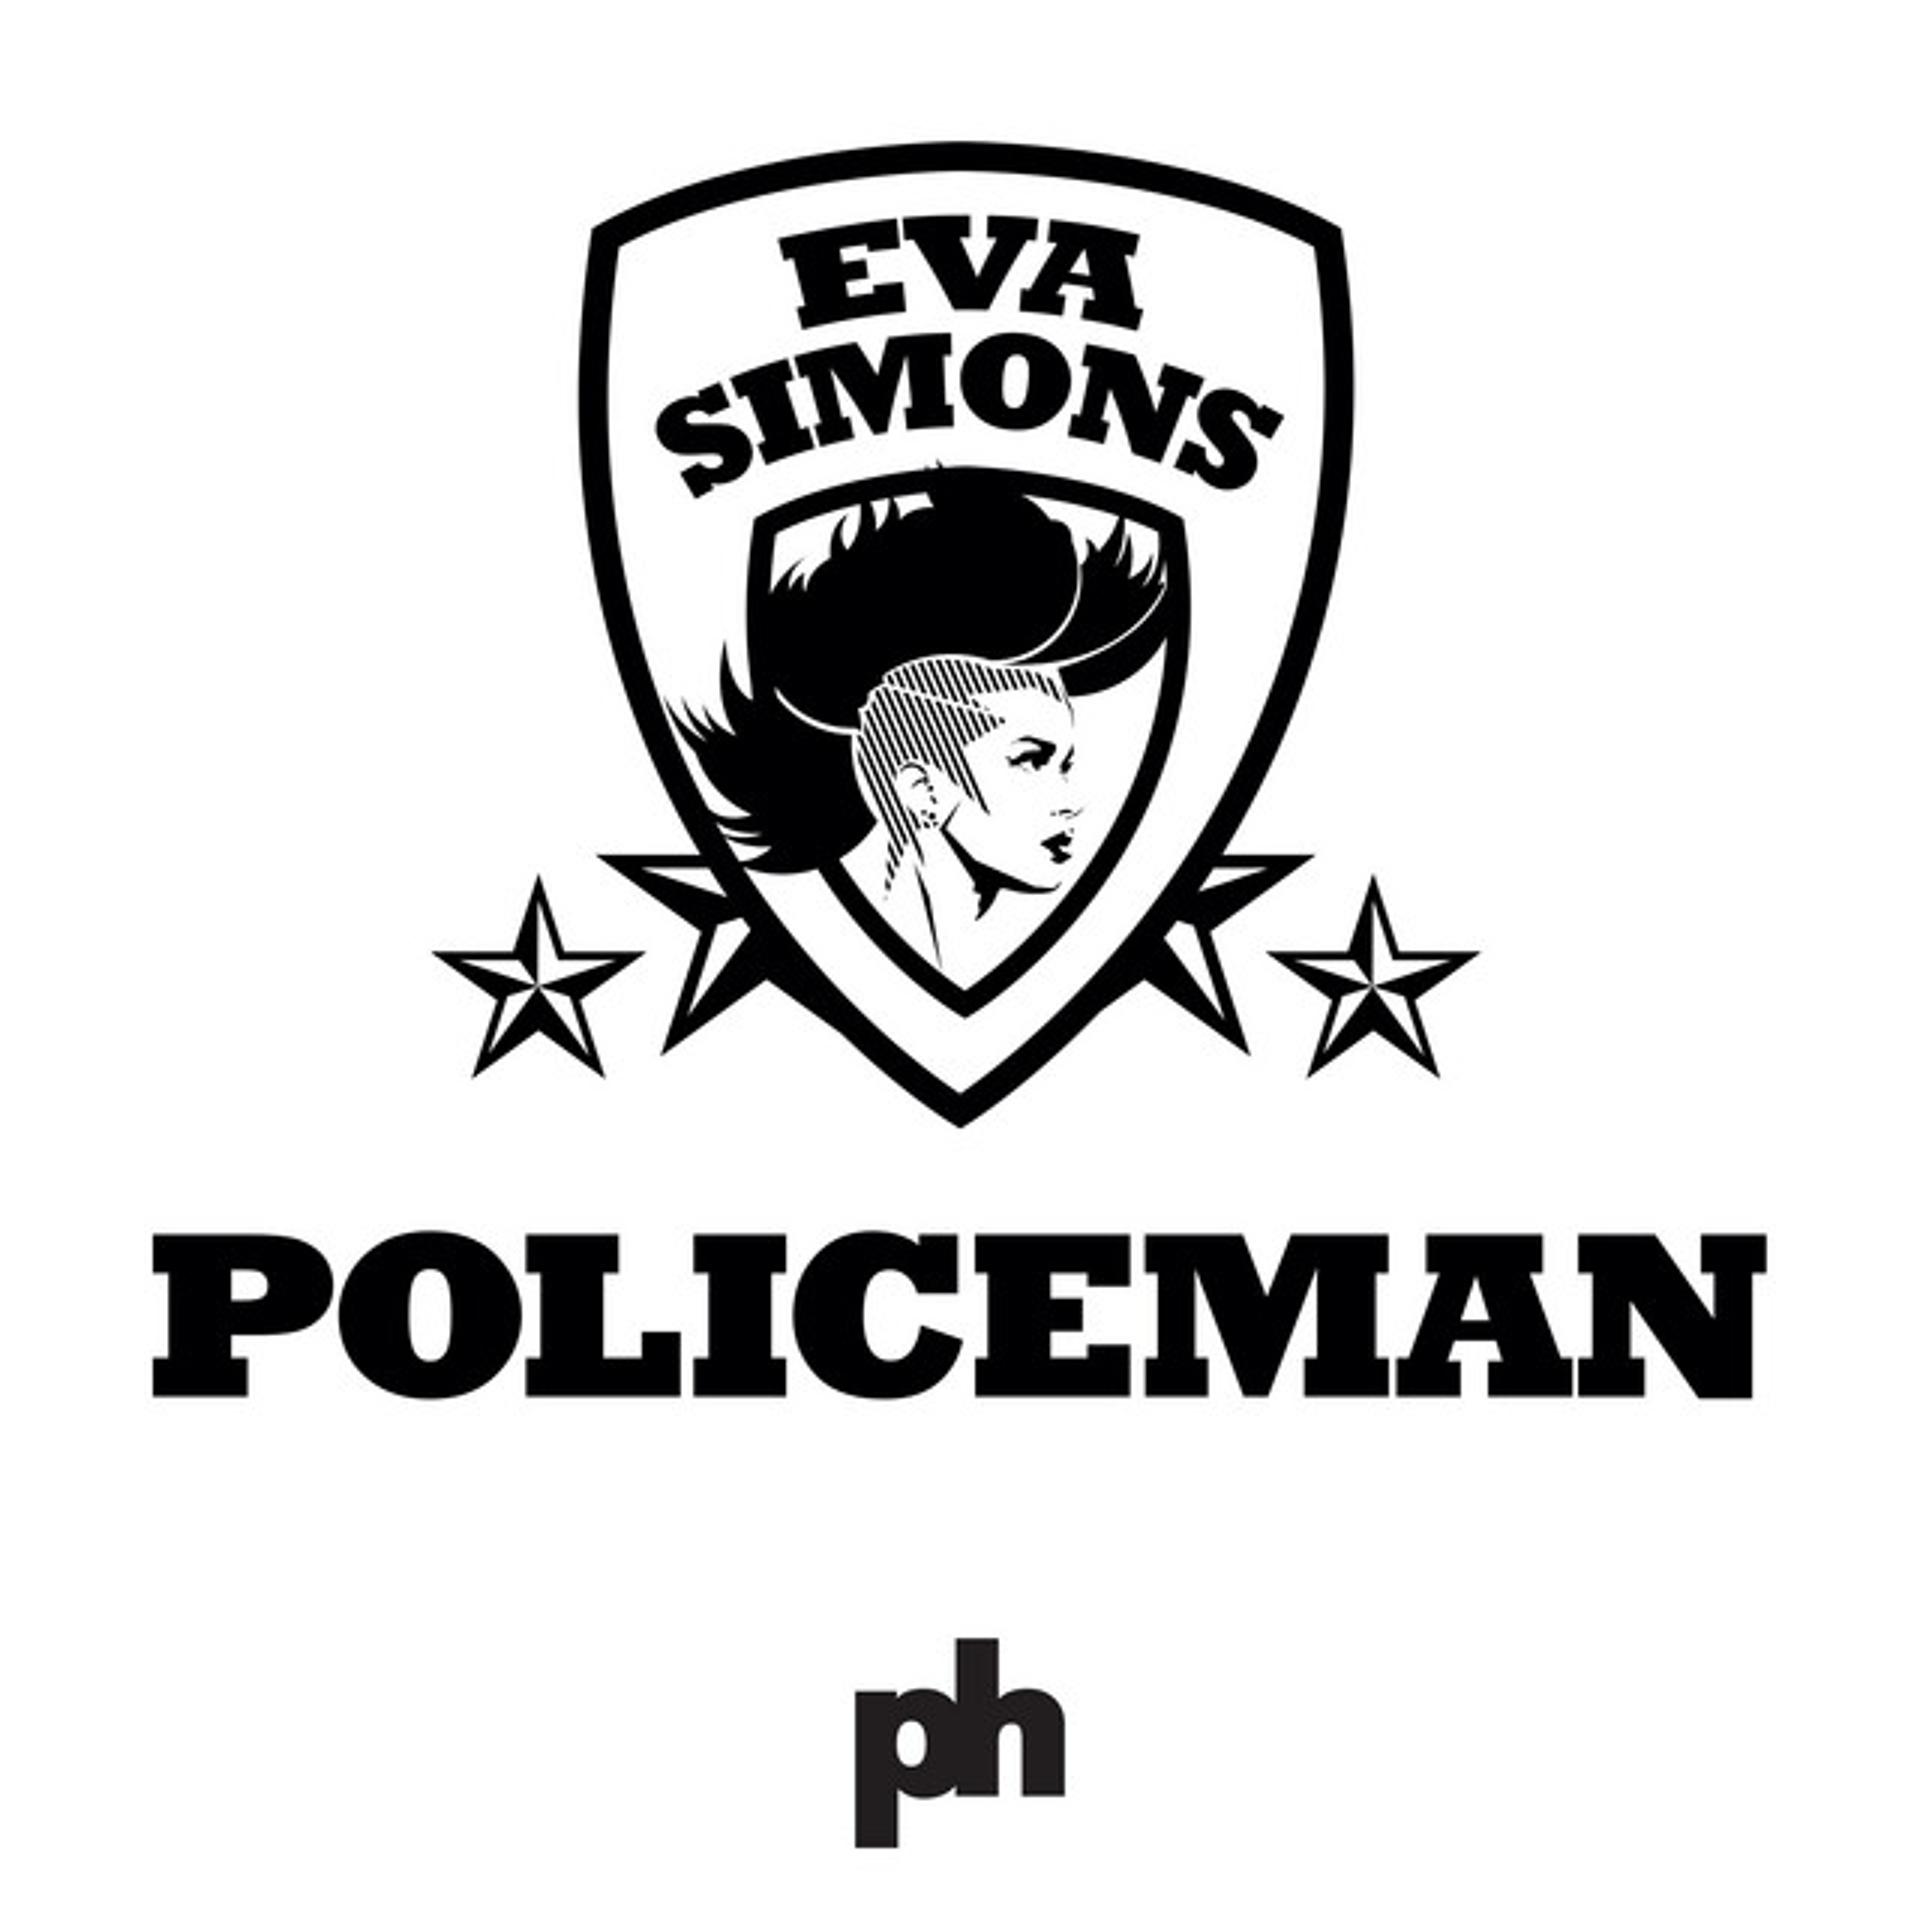 Mr policeman. Мистер полисмен. Хей Мистер полисмен. Eva Simons policeman. Eva Simons feat. Konshens - policeman.